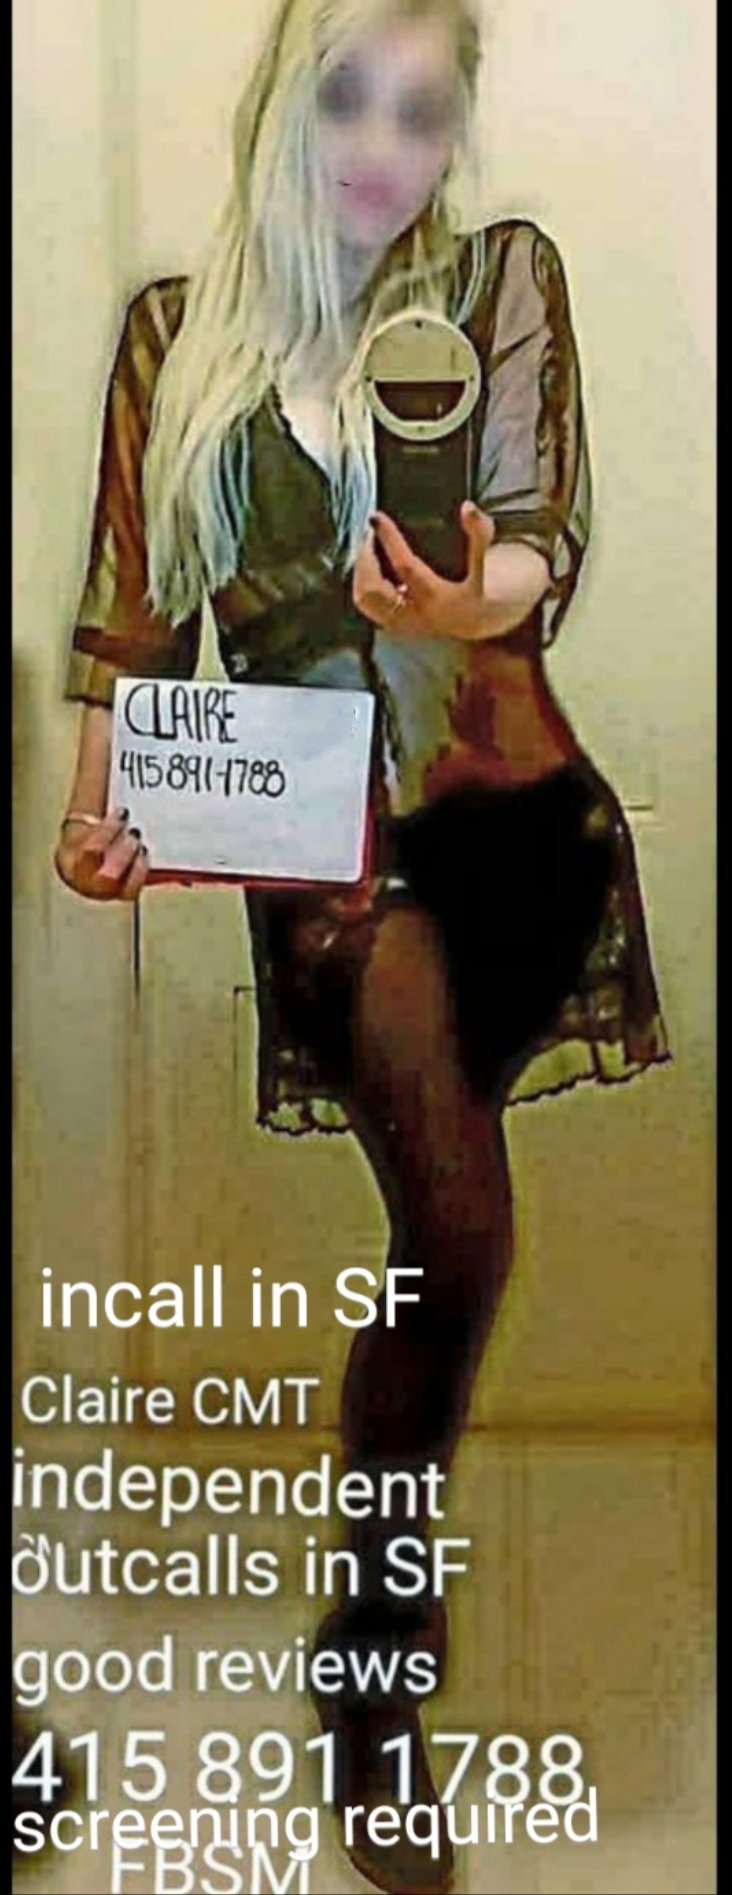 ClaireSF Profile, Escort in San Francisco, 4158911788